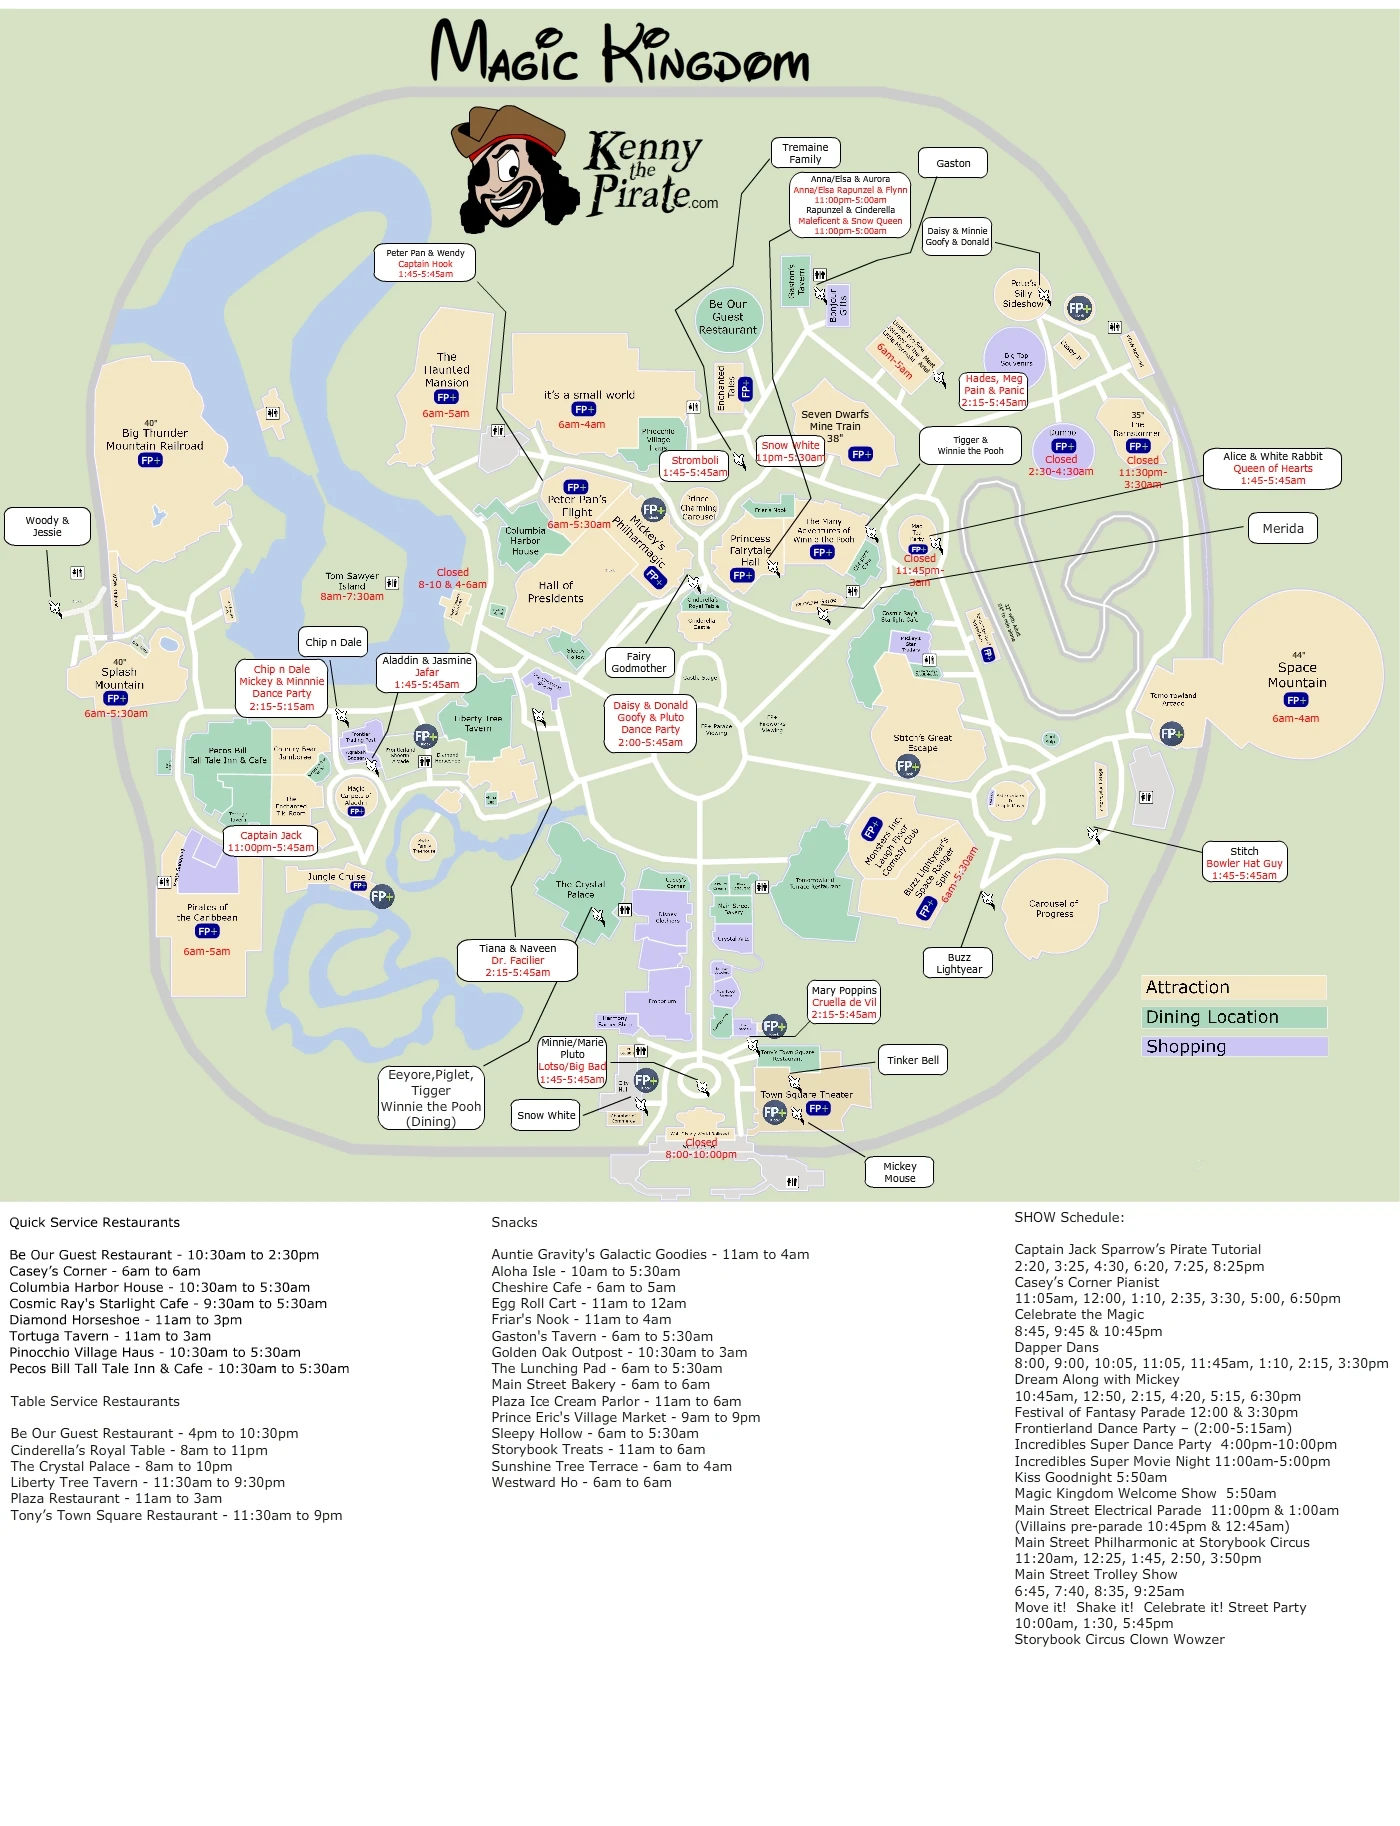 Magic Kingdom 24 Hour Rock Your Disney Side Map KennythePirate